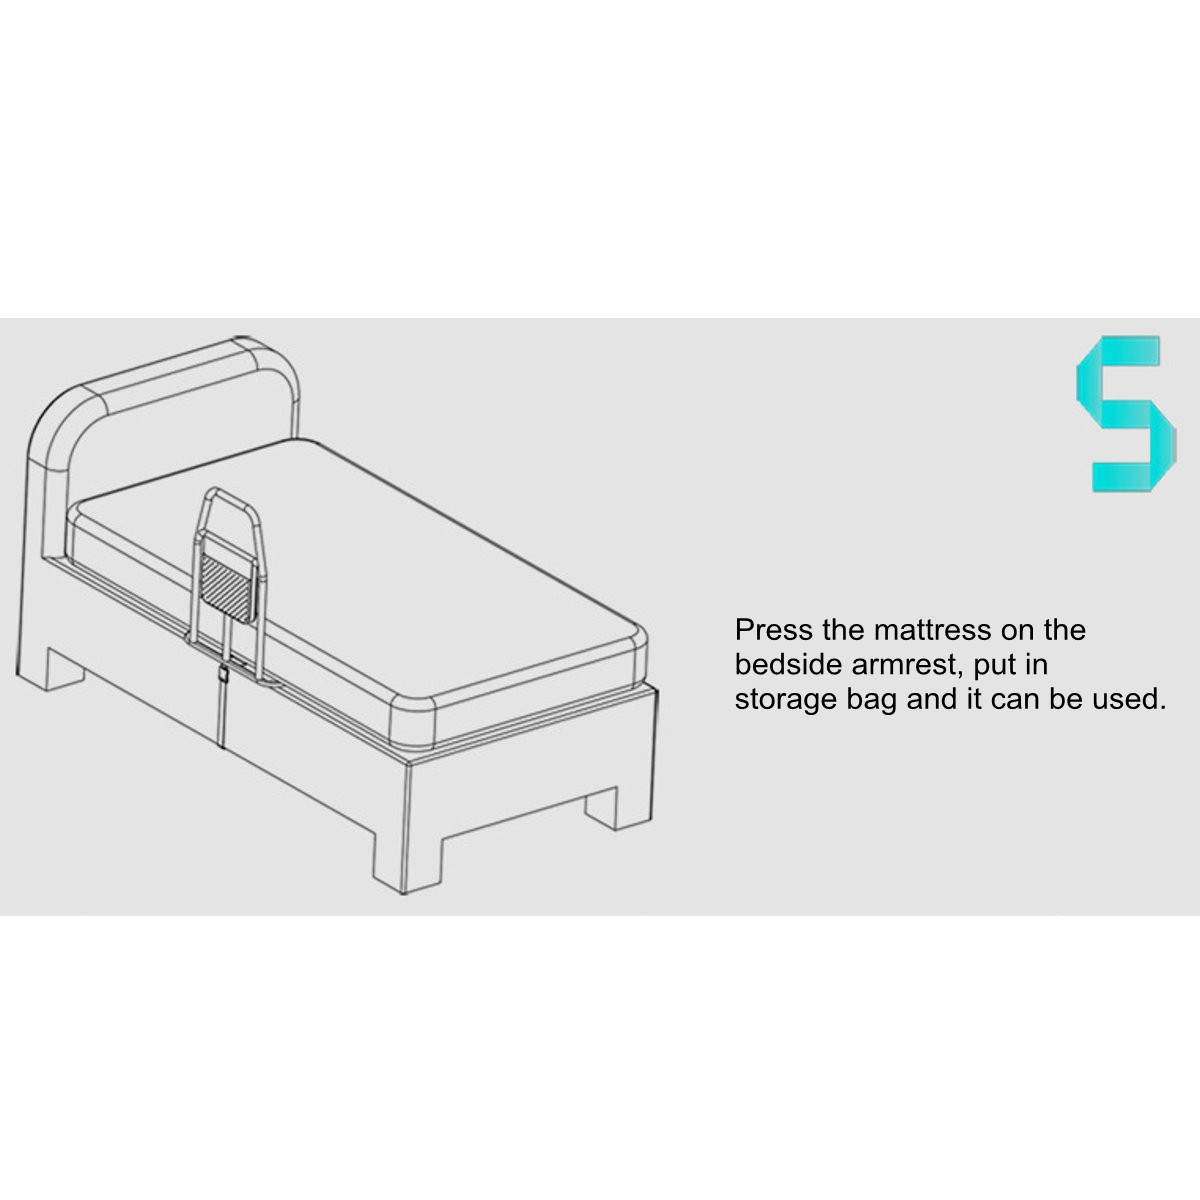 Aluminium-Folding-Bed-Assist-Rail-Handle-Adult-Elderly-Home-Hospital-Aids-Safety-1664616